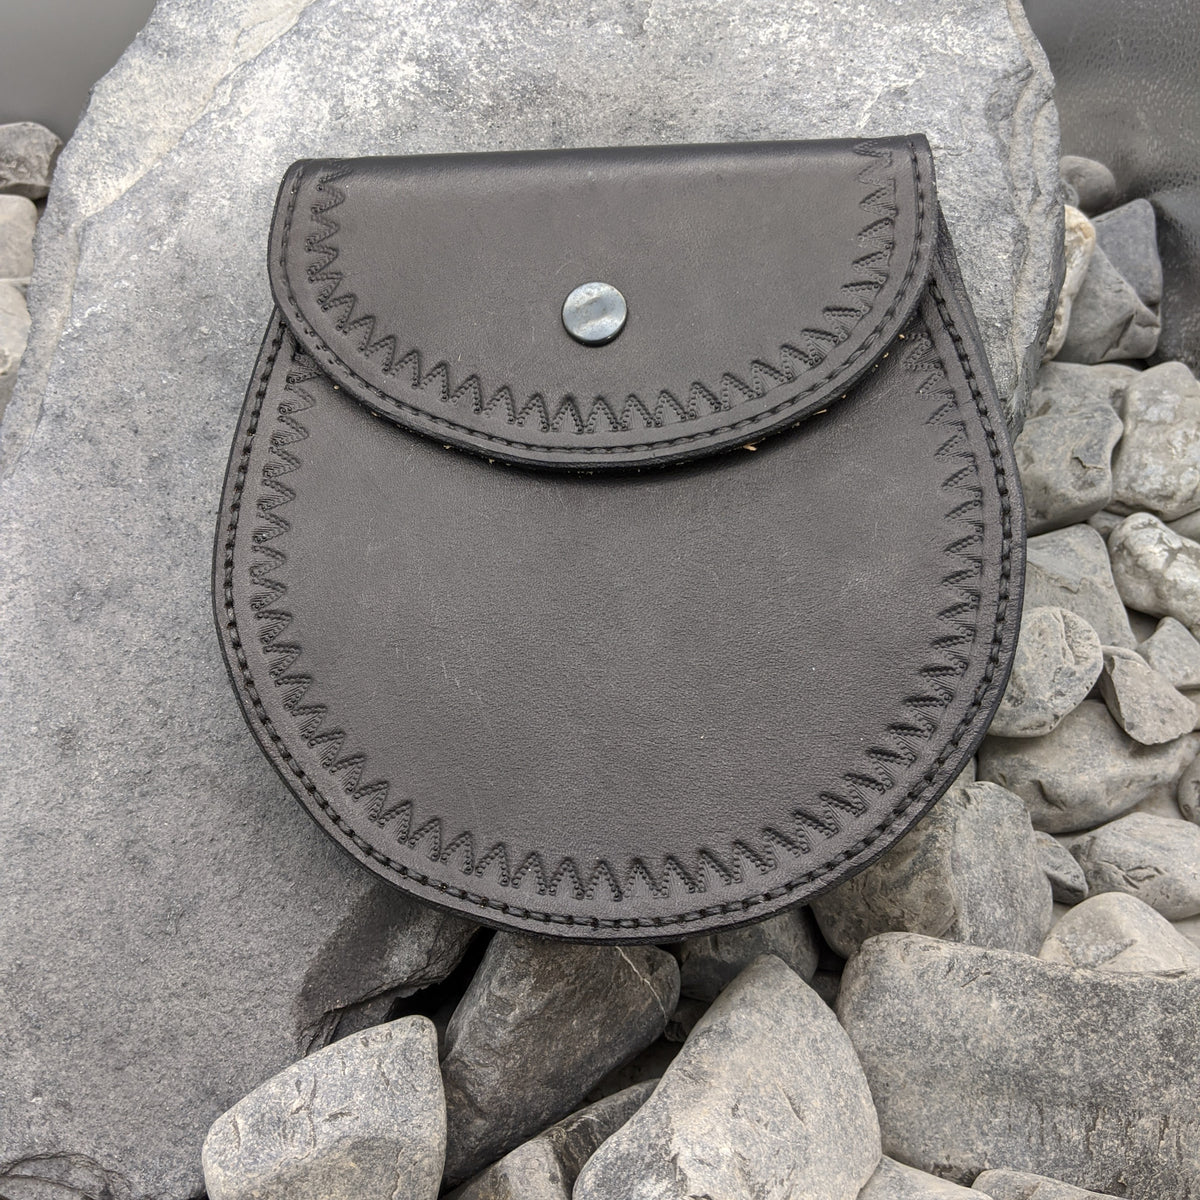 Viking belt bag / Sporran